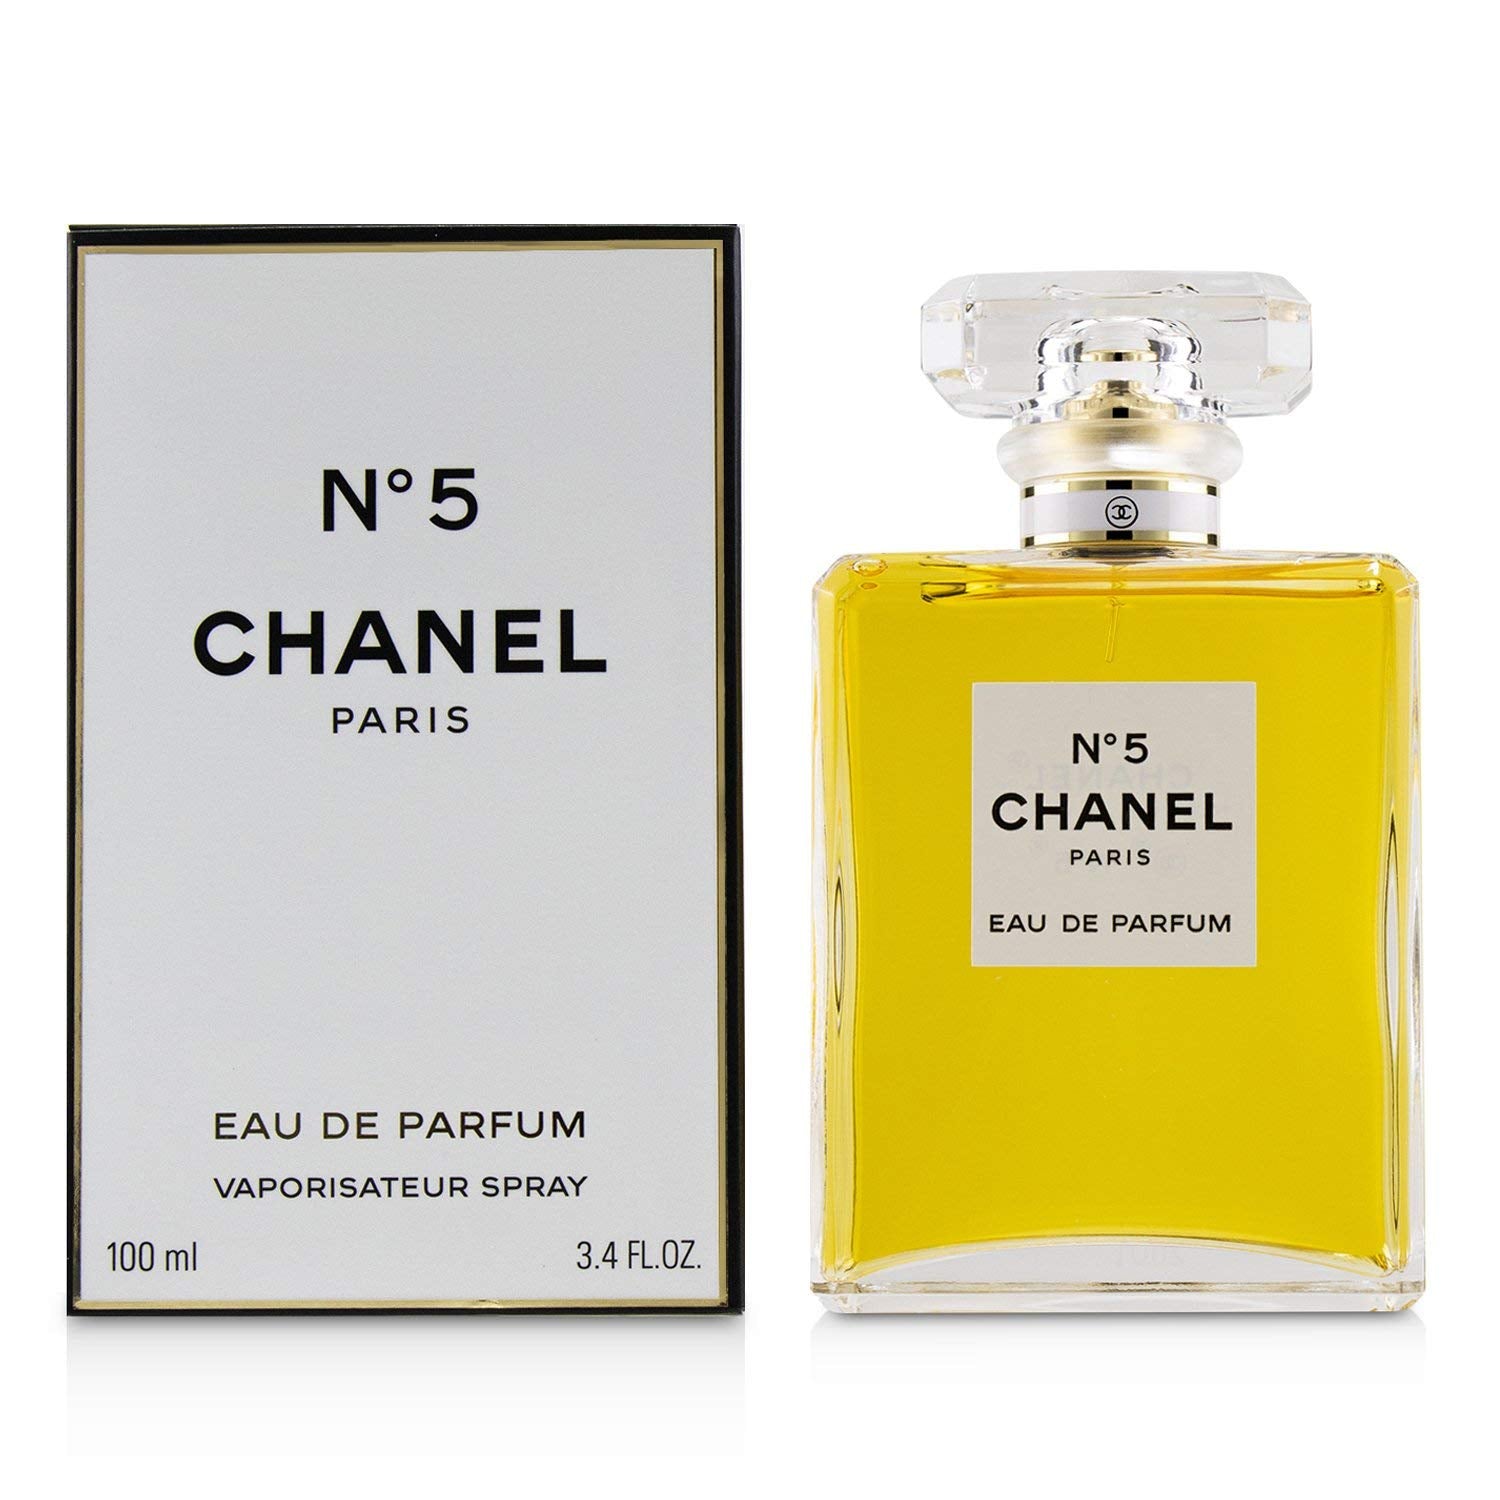 Perfume Chanel No 5 eau de parfum Chanel for women 100 ml hot sale original  fragrance high quality brand - AliExpress